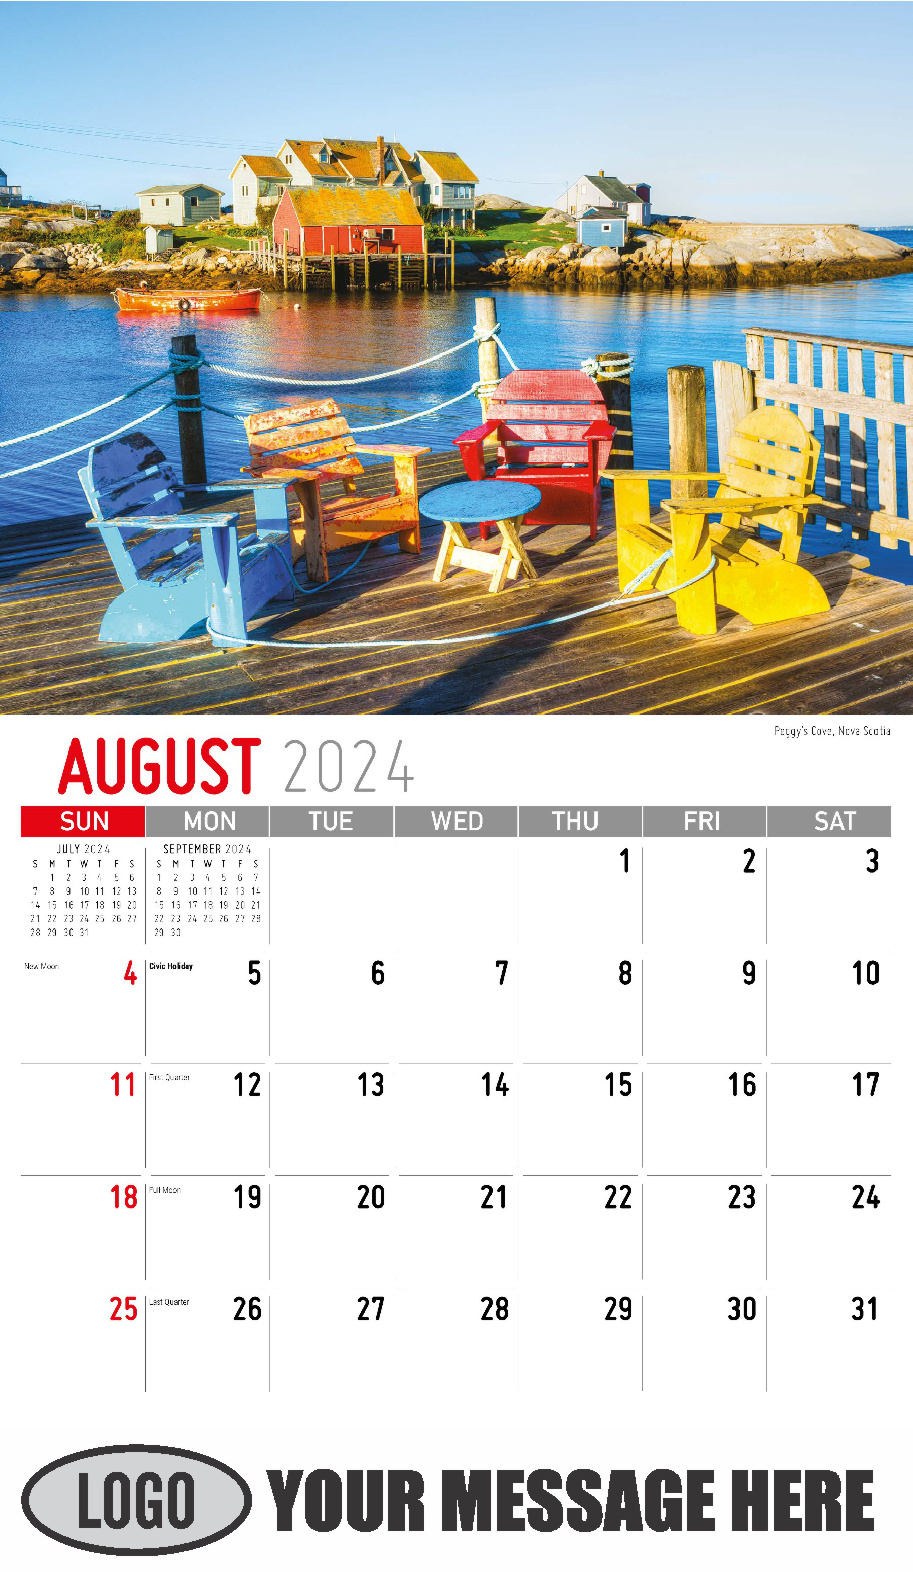 Atlantic Canada Scenic 2024 Business Promotion Calendar - August